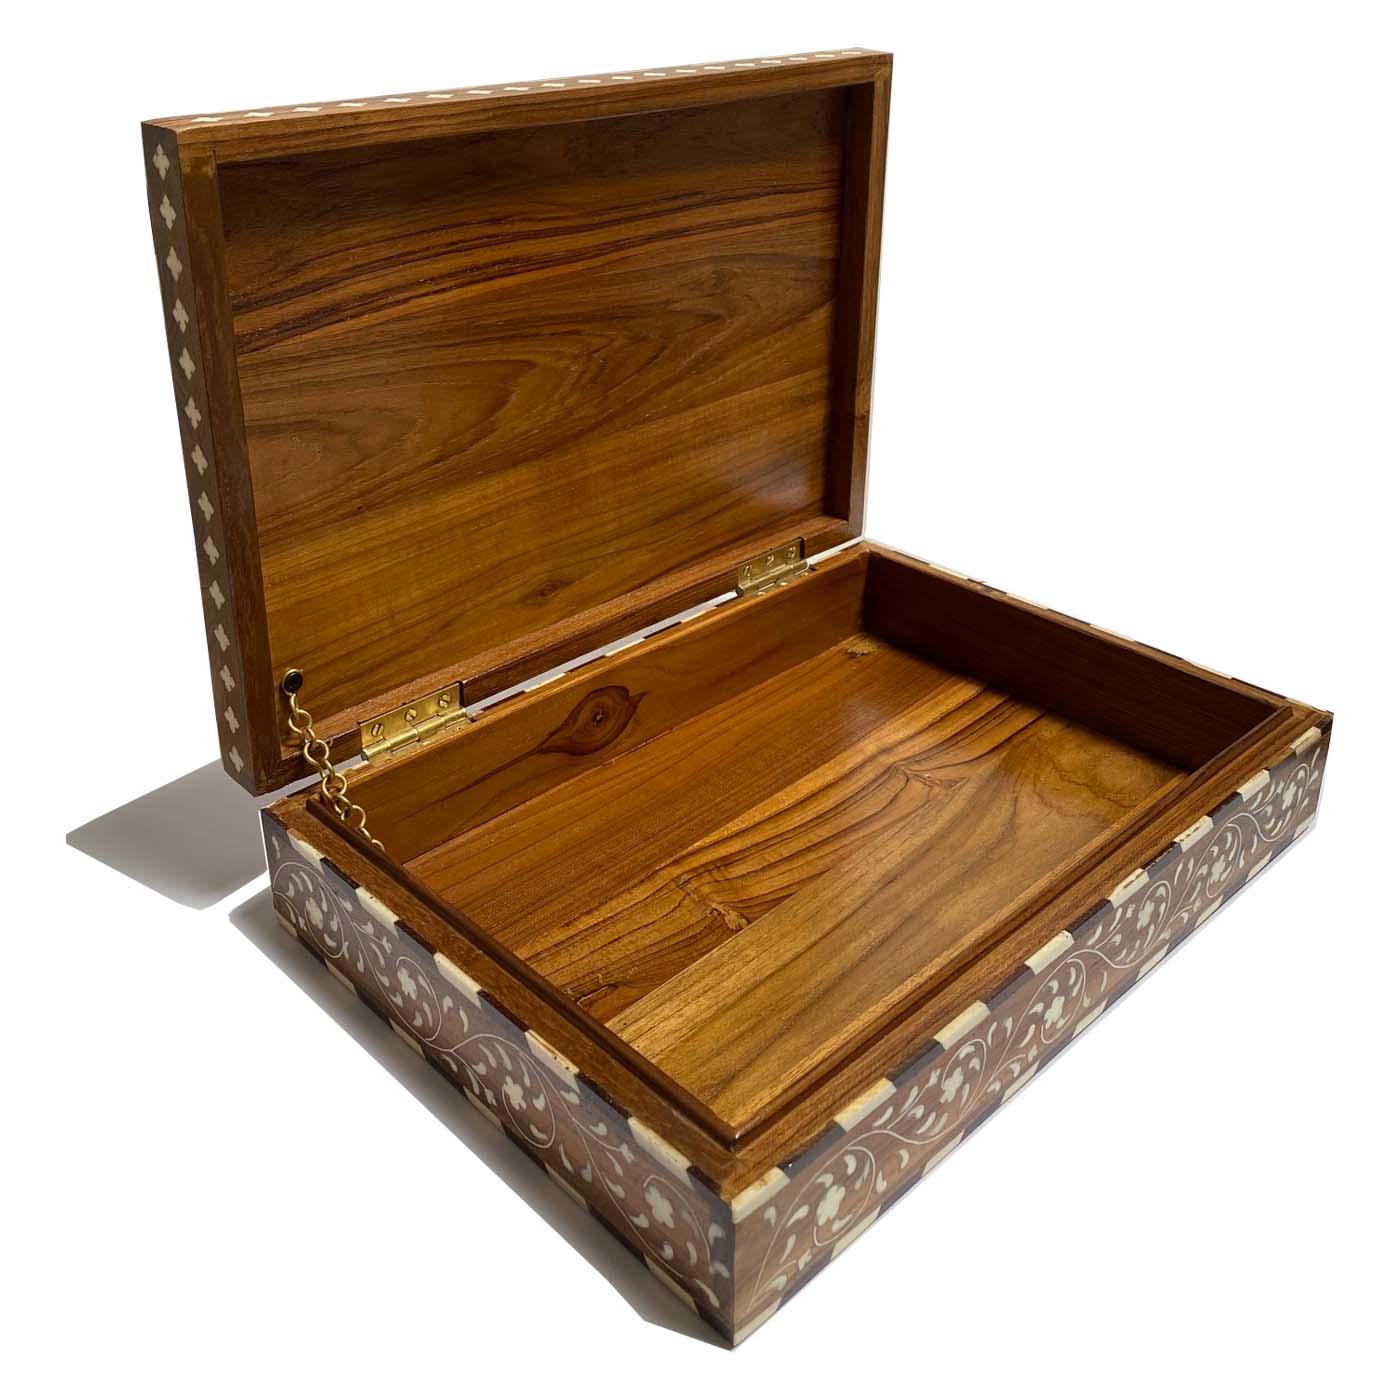 Traditional Inlay Box